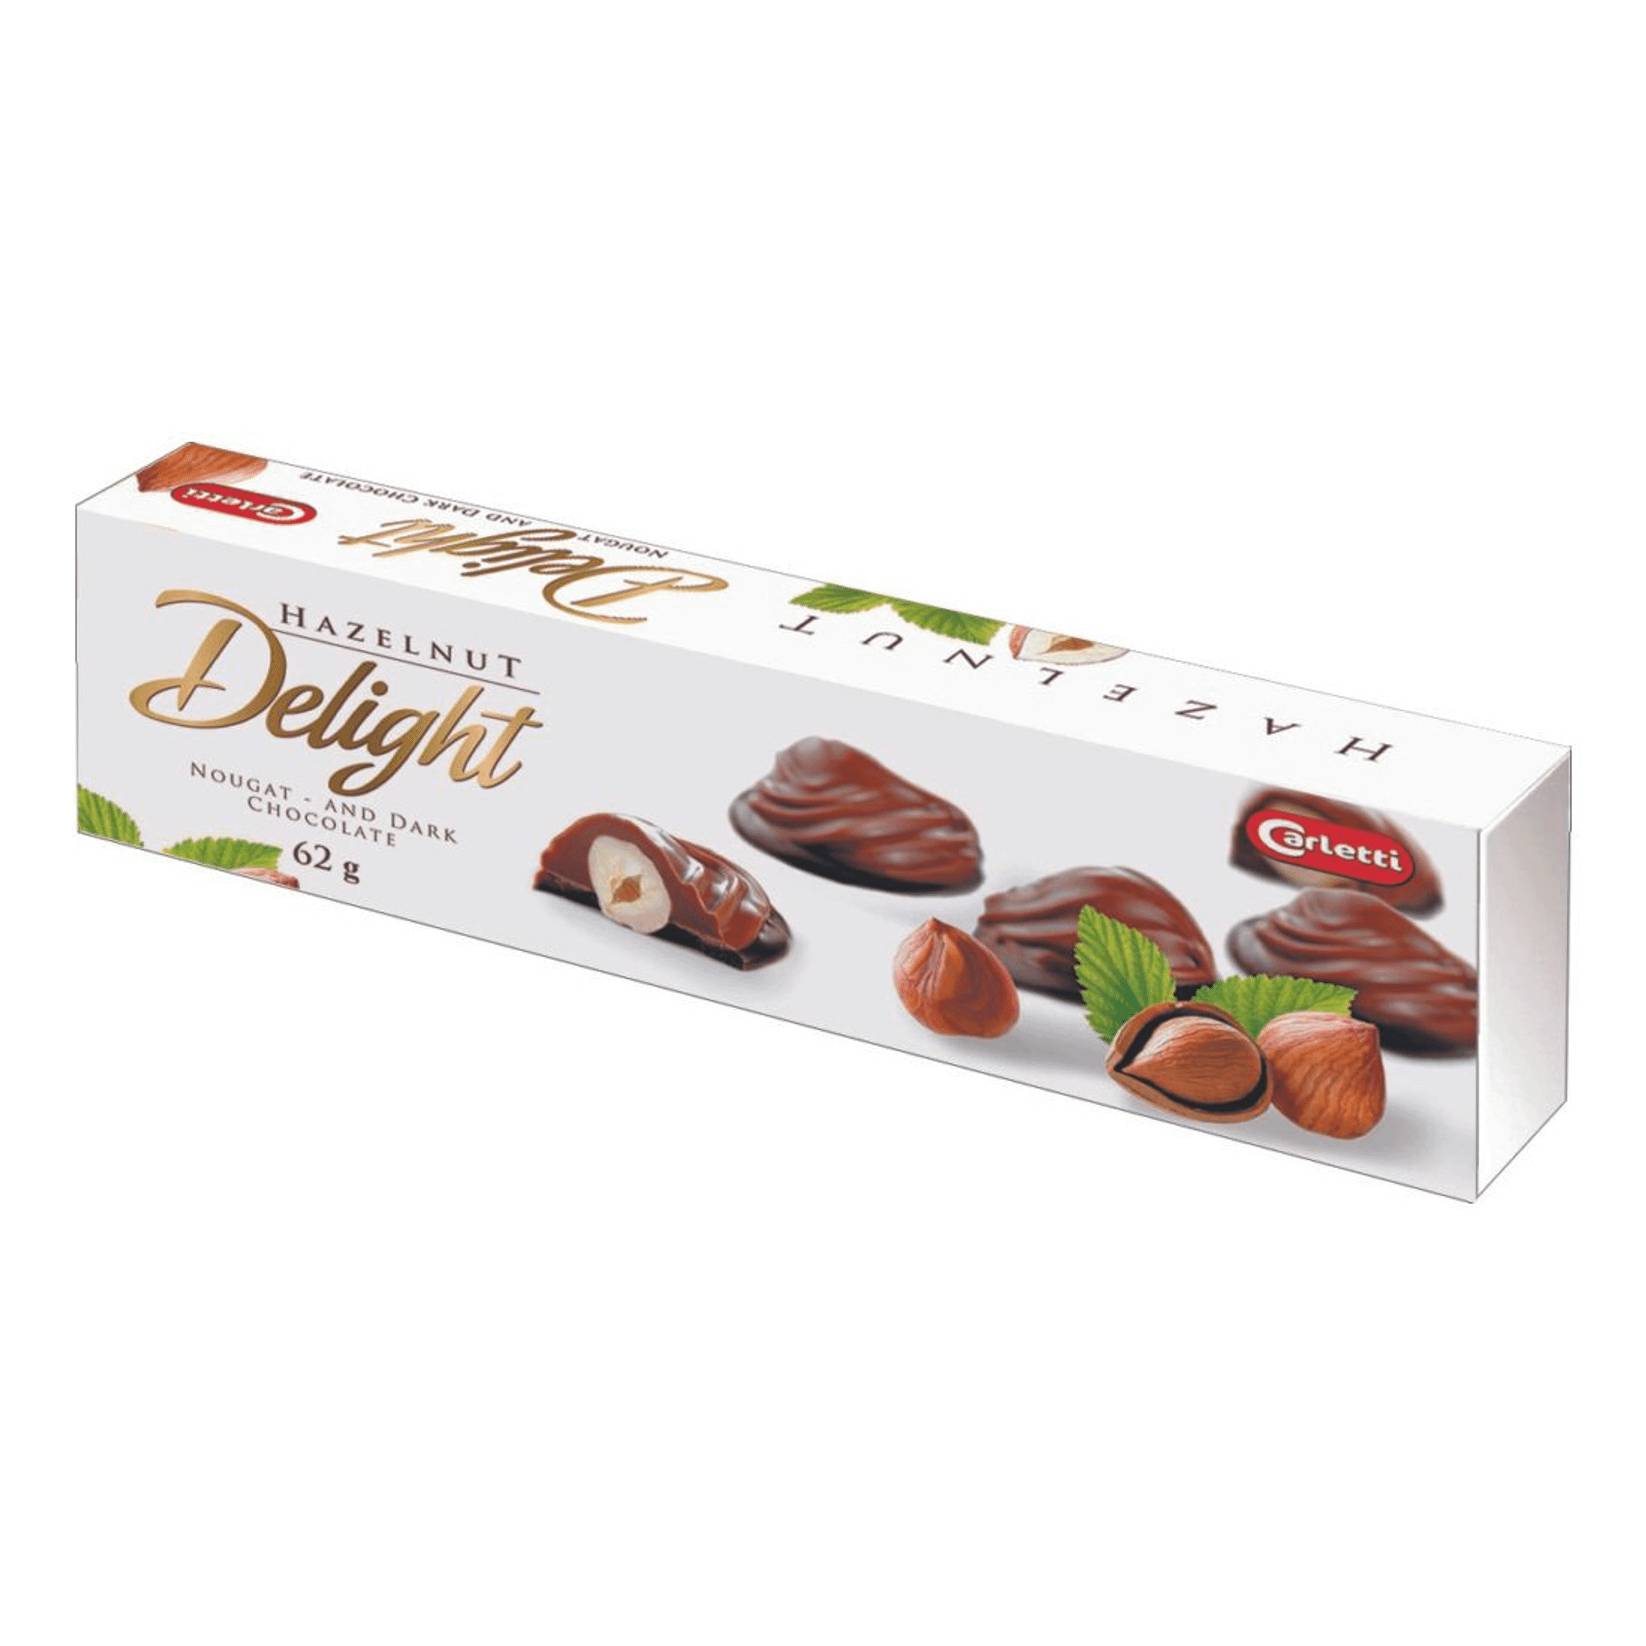 Набор шоколадный Carletti Hazelnut Delight, 62 г коробка складная под 25 конфет белая 22 х 22 х 3 3 см